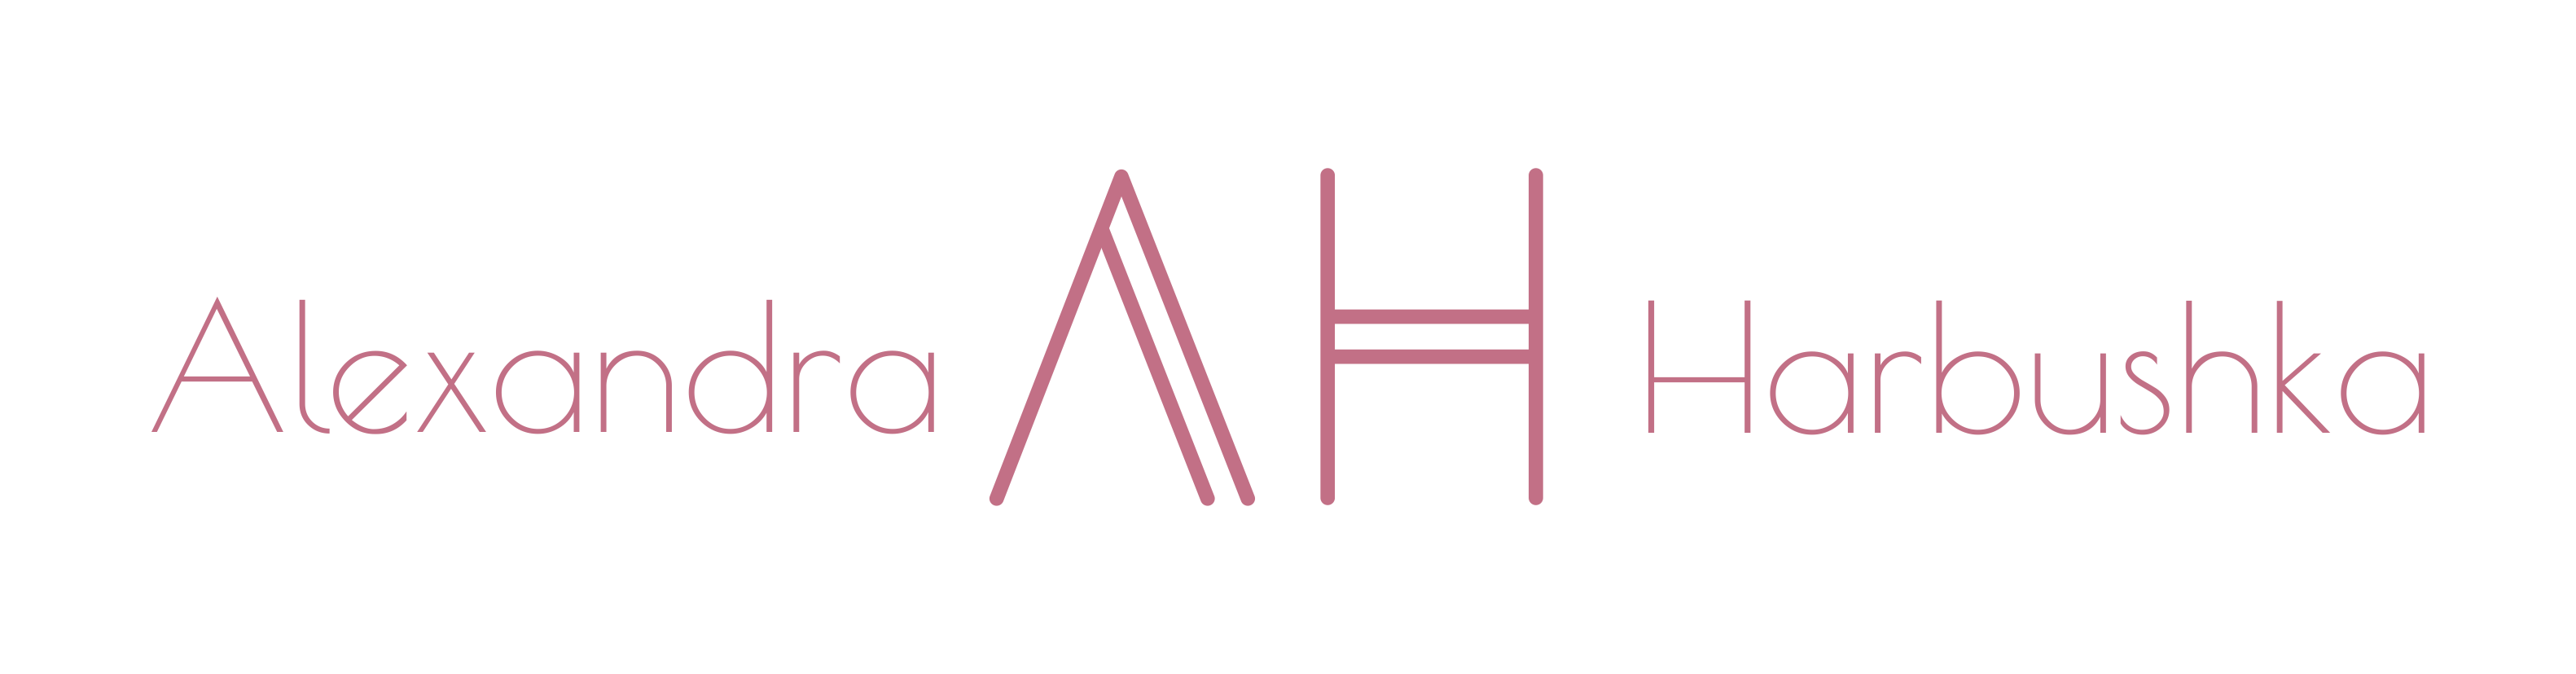 alexandraharbushka.com logo